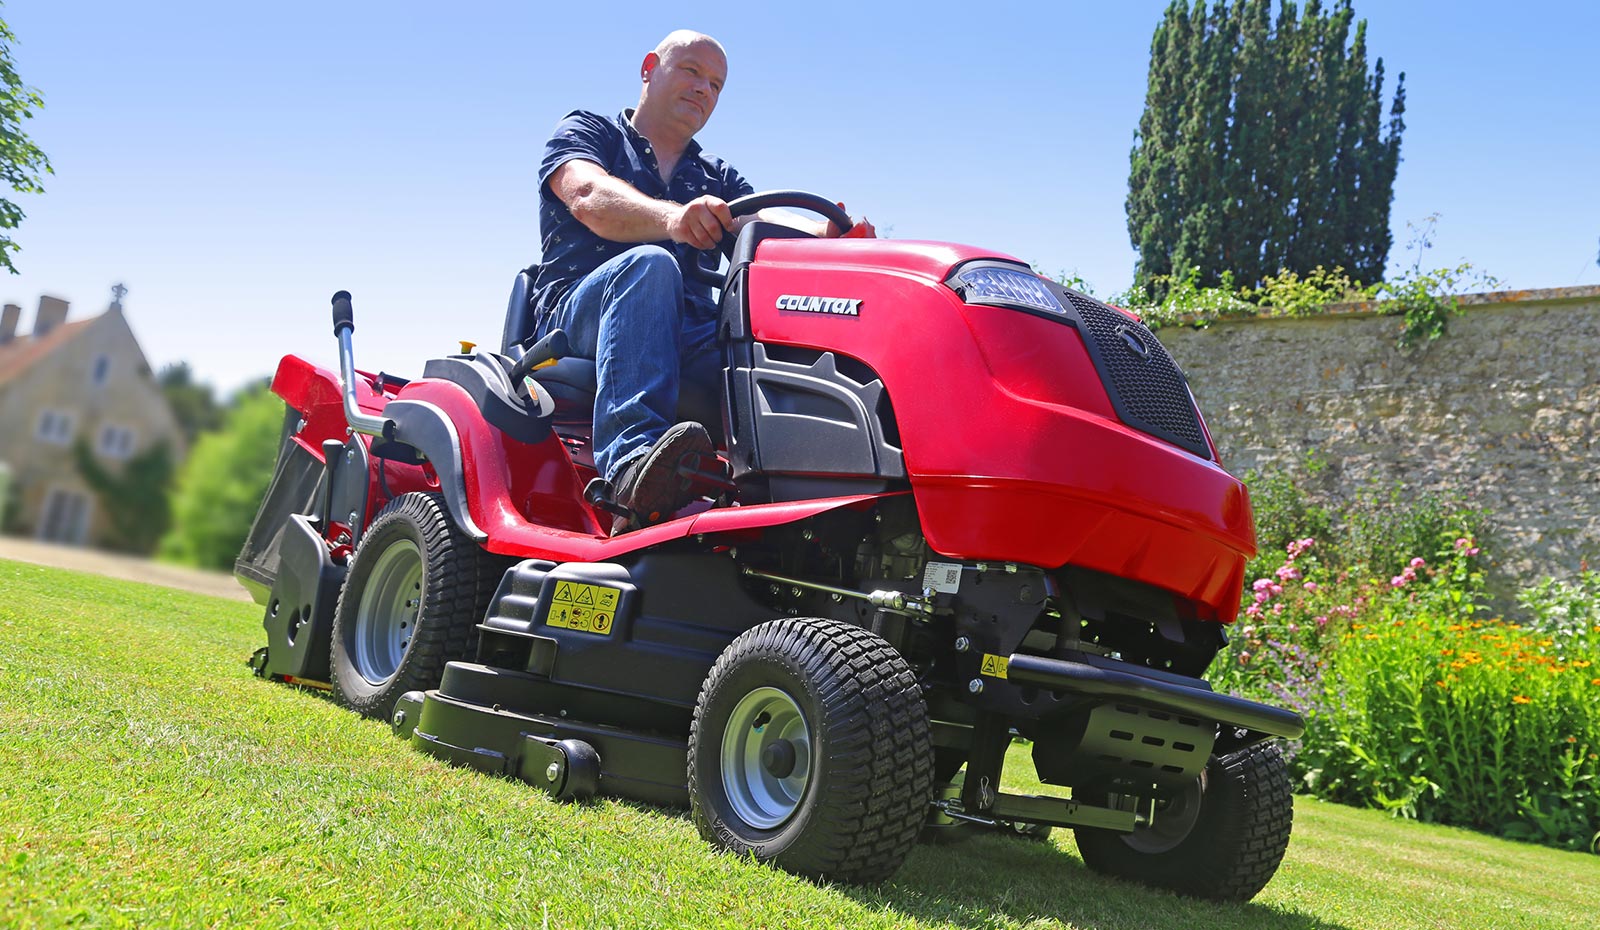 Countax C60 lawn garden tractor riding mower